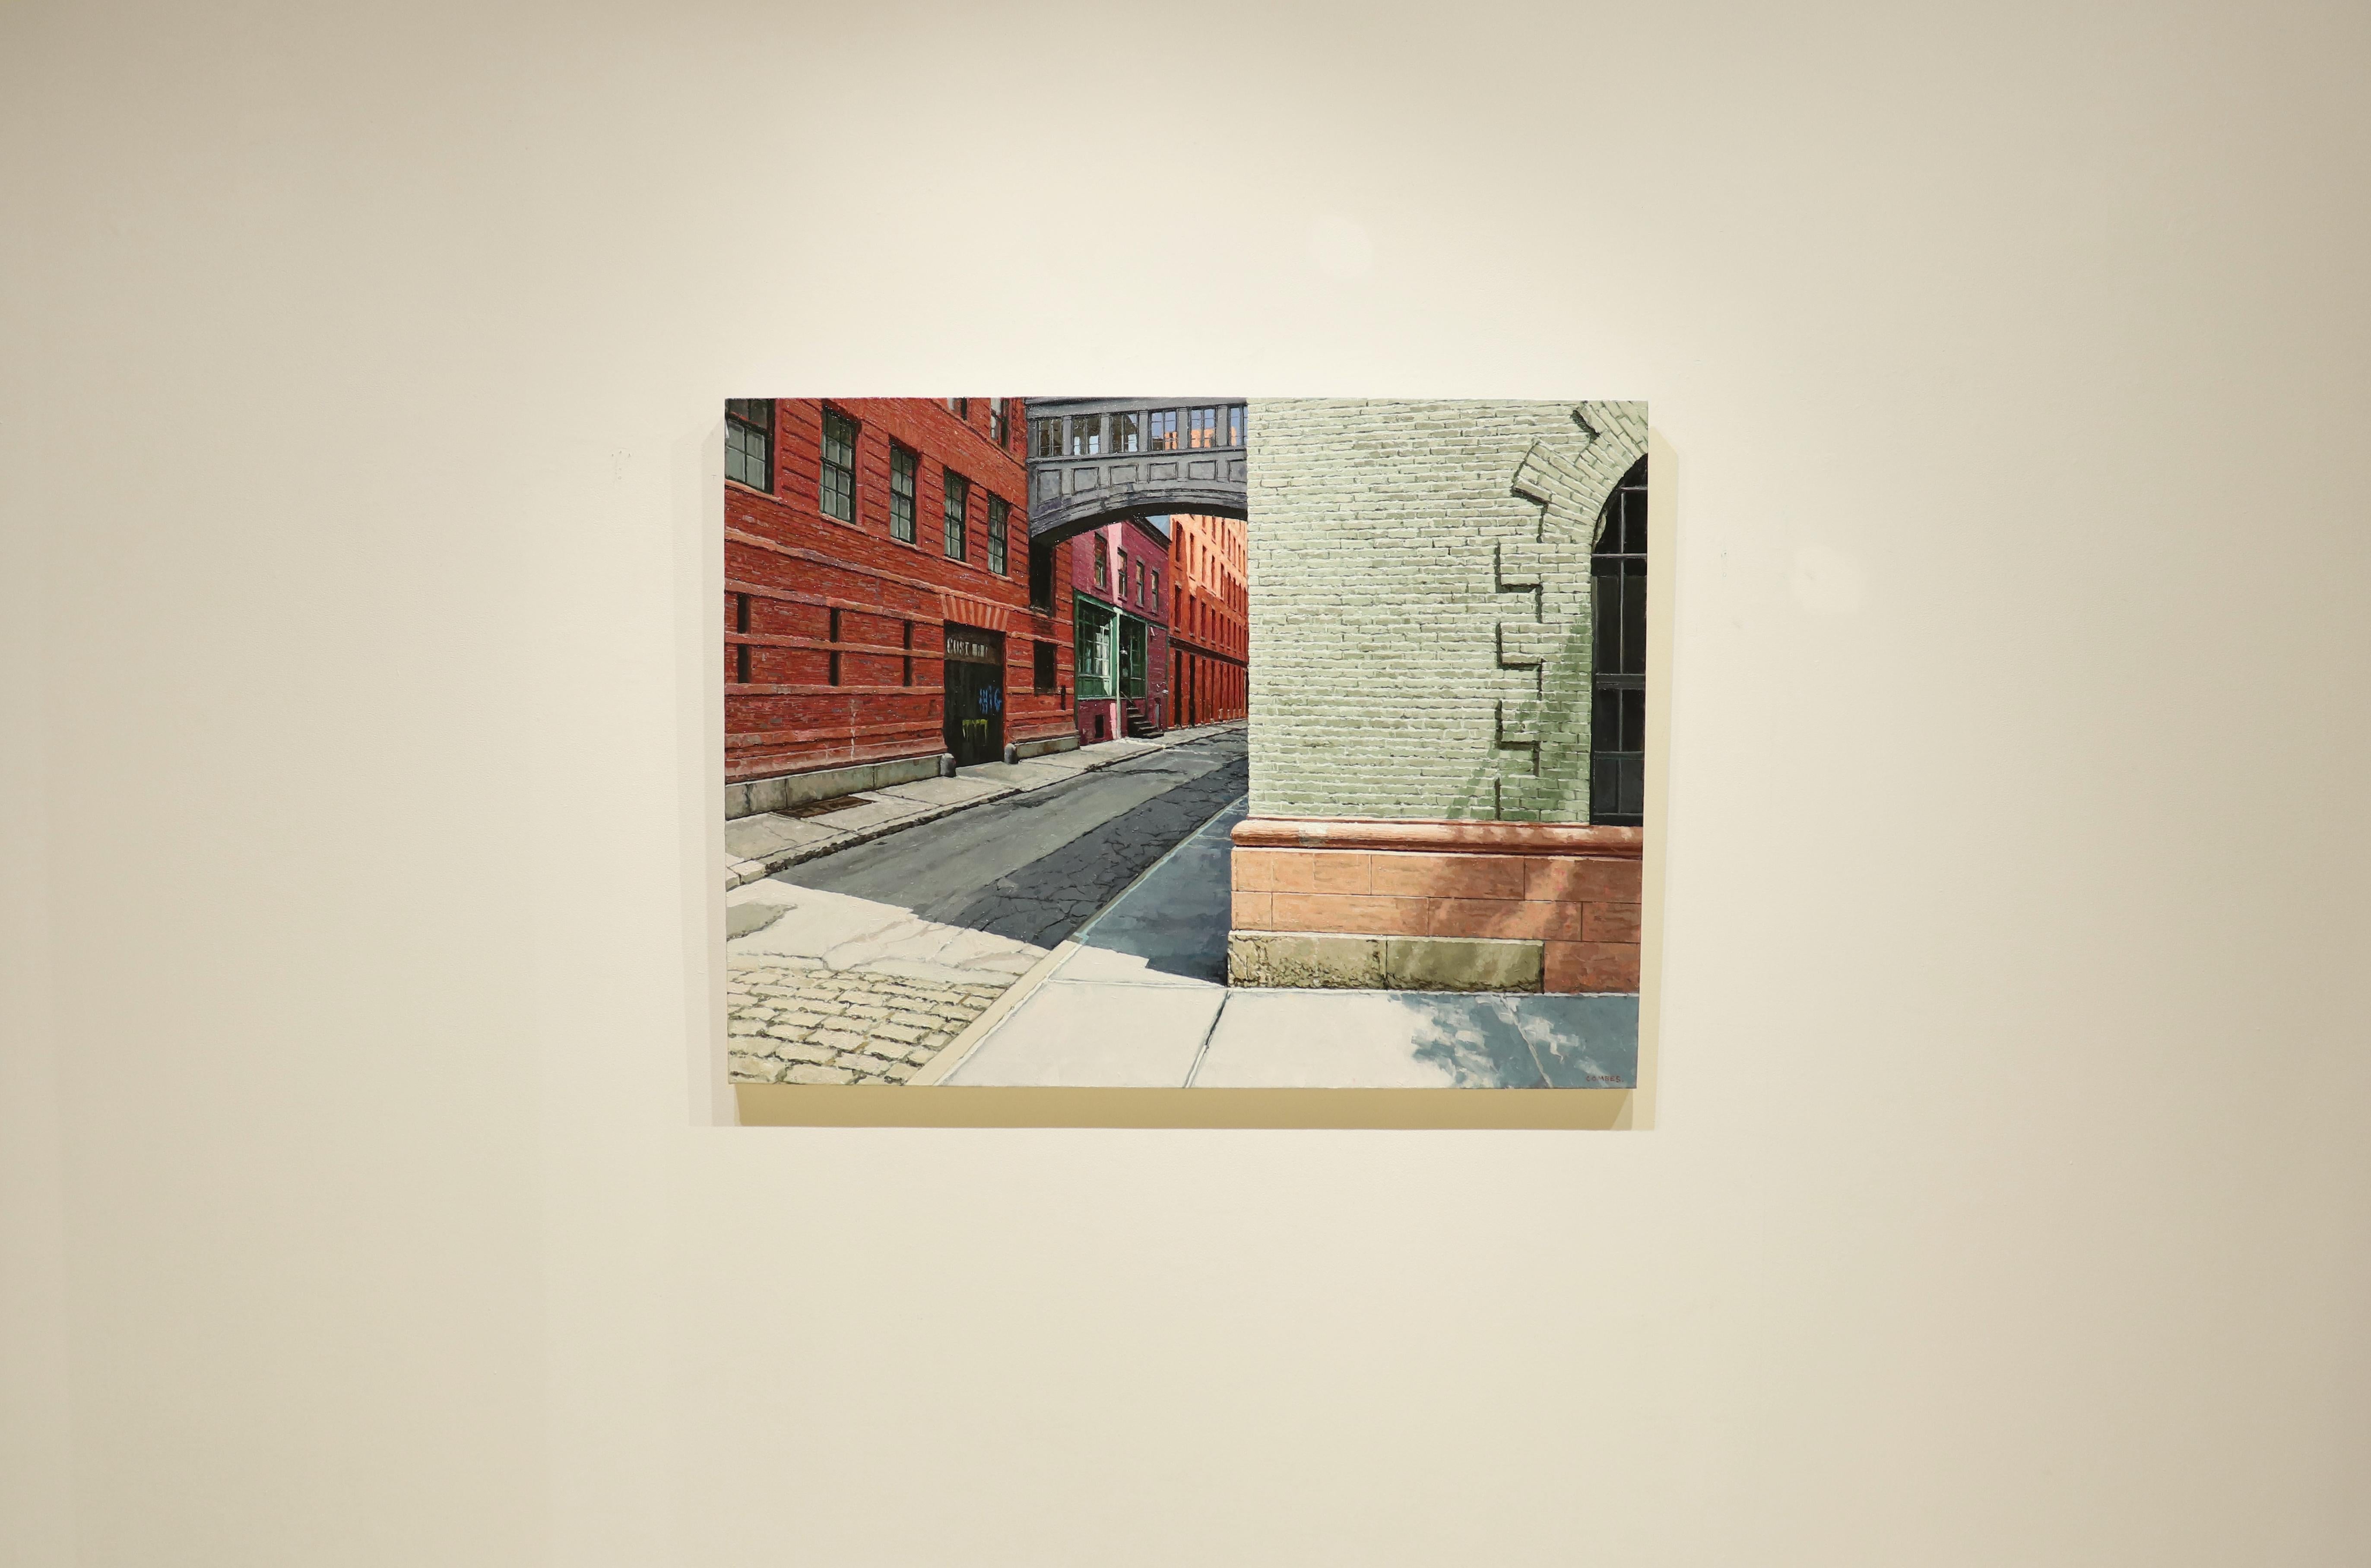 SUNDAY MORNING - Hyperrealist Street Corner / Cobblestones / Red brick / Shadows - Painting by Richard Combes